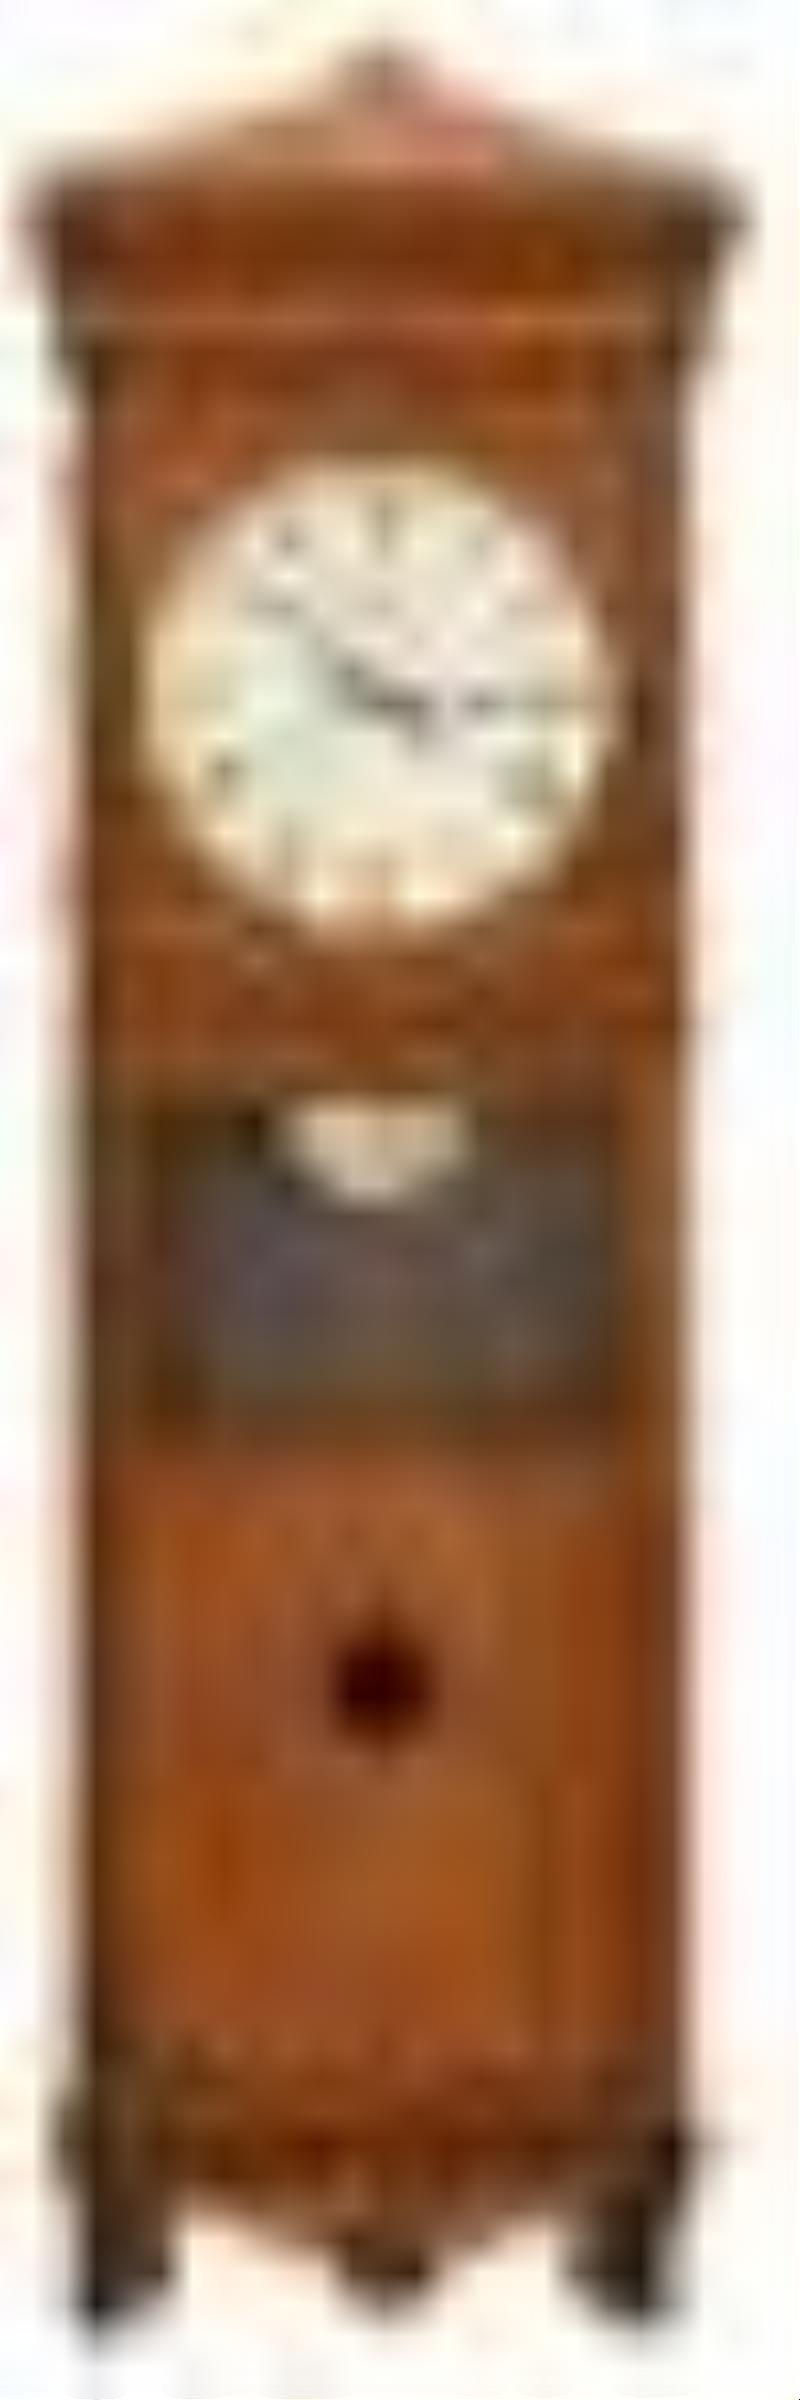 Bundy Mfg. Co. Time Recorder Clock